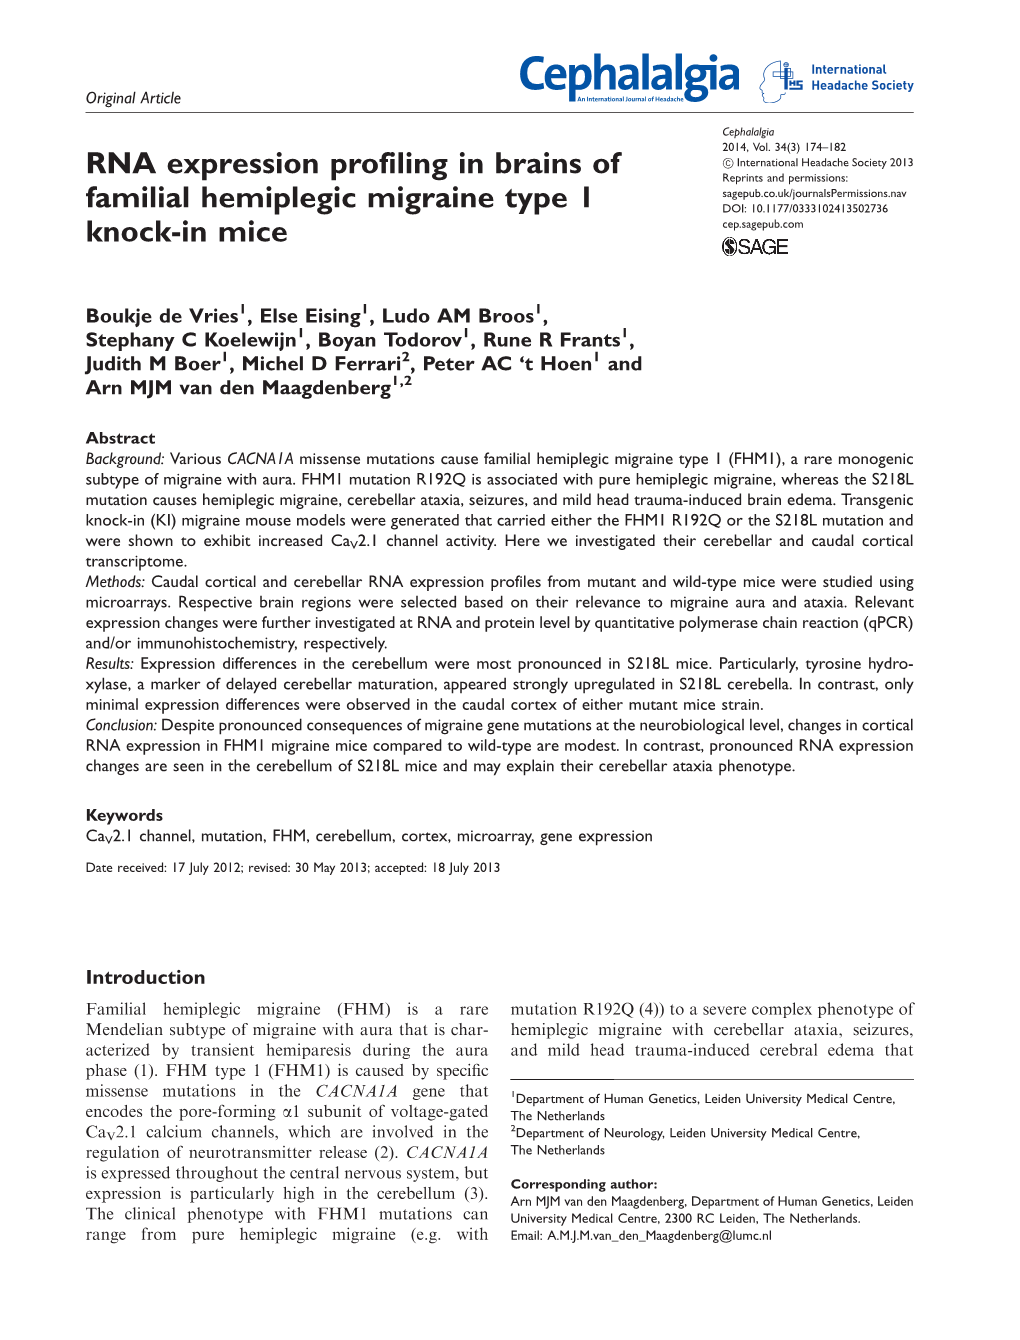 RNA Expression Profiling in Brains of Familial Hemiplegic Migraine Type 1